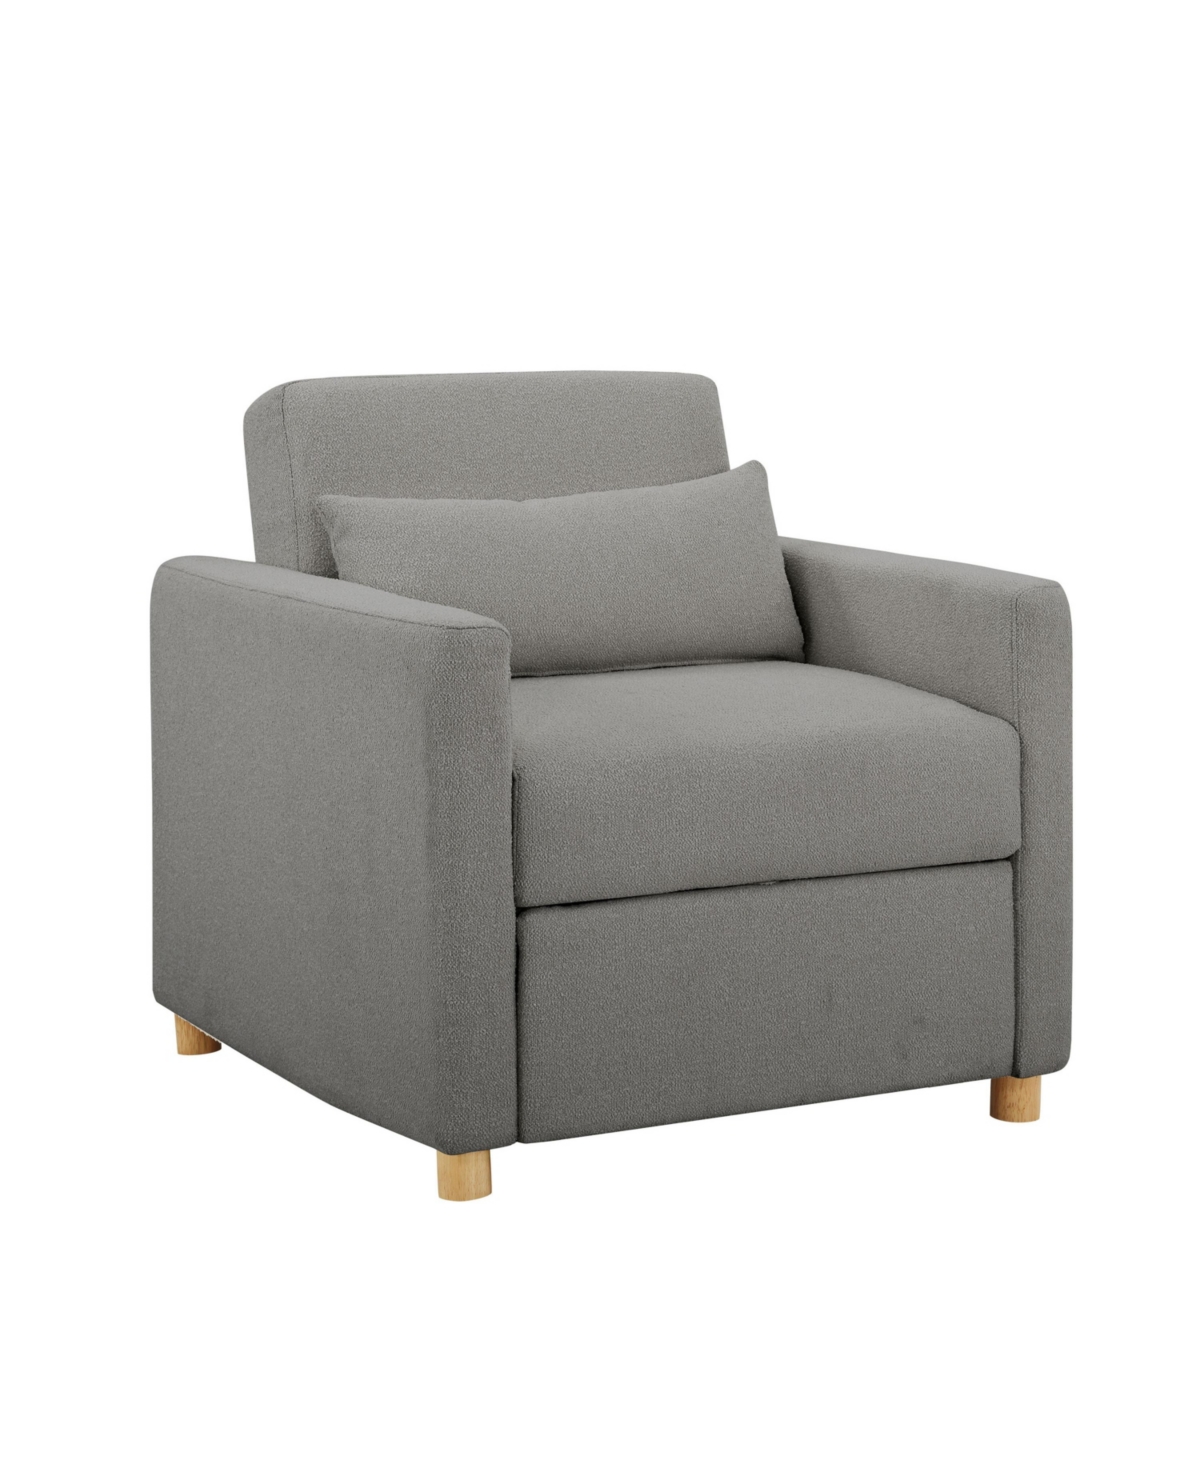 Serta Ivar 36" Convertible Chair In Gray